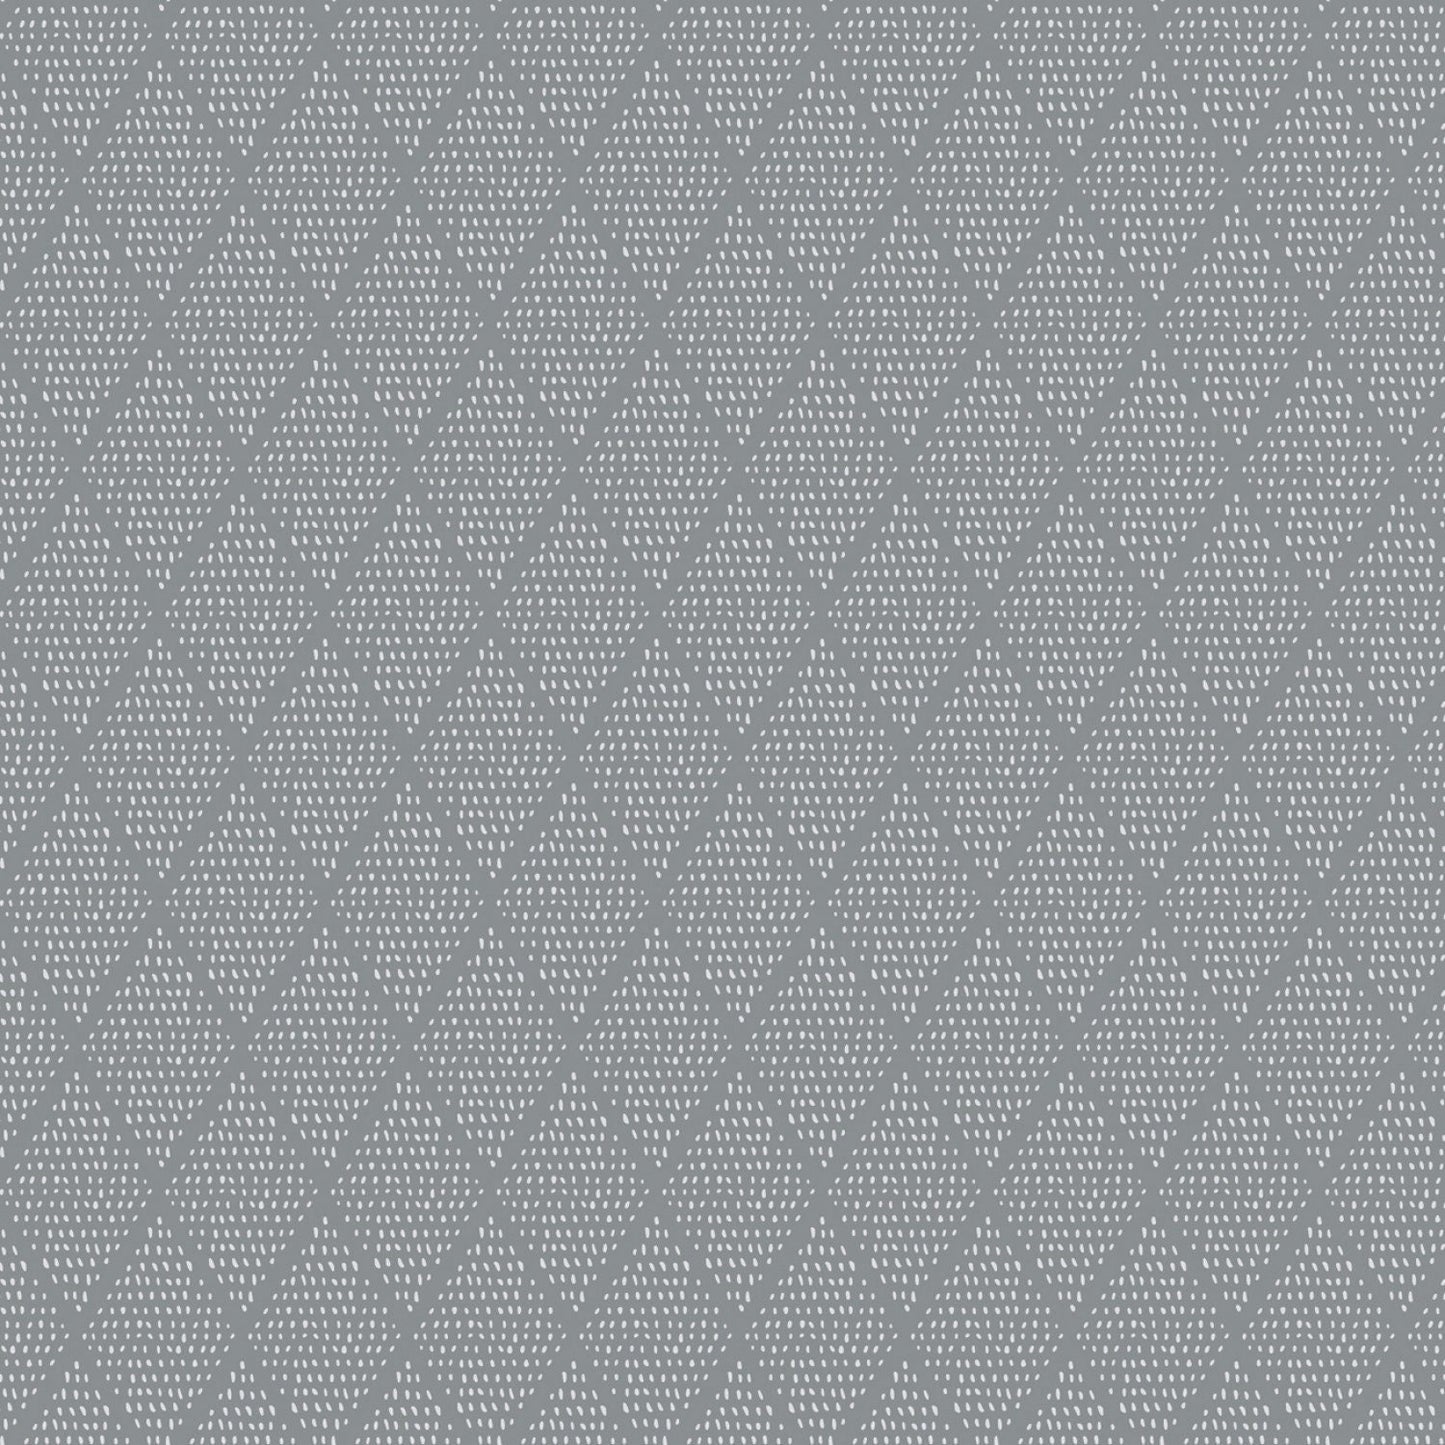 Bear Hug Grey Texture 21181504-2 Cotton Woven Fabric